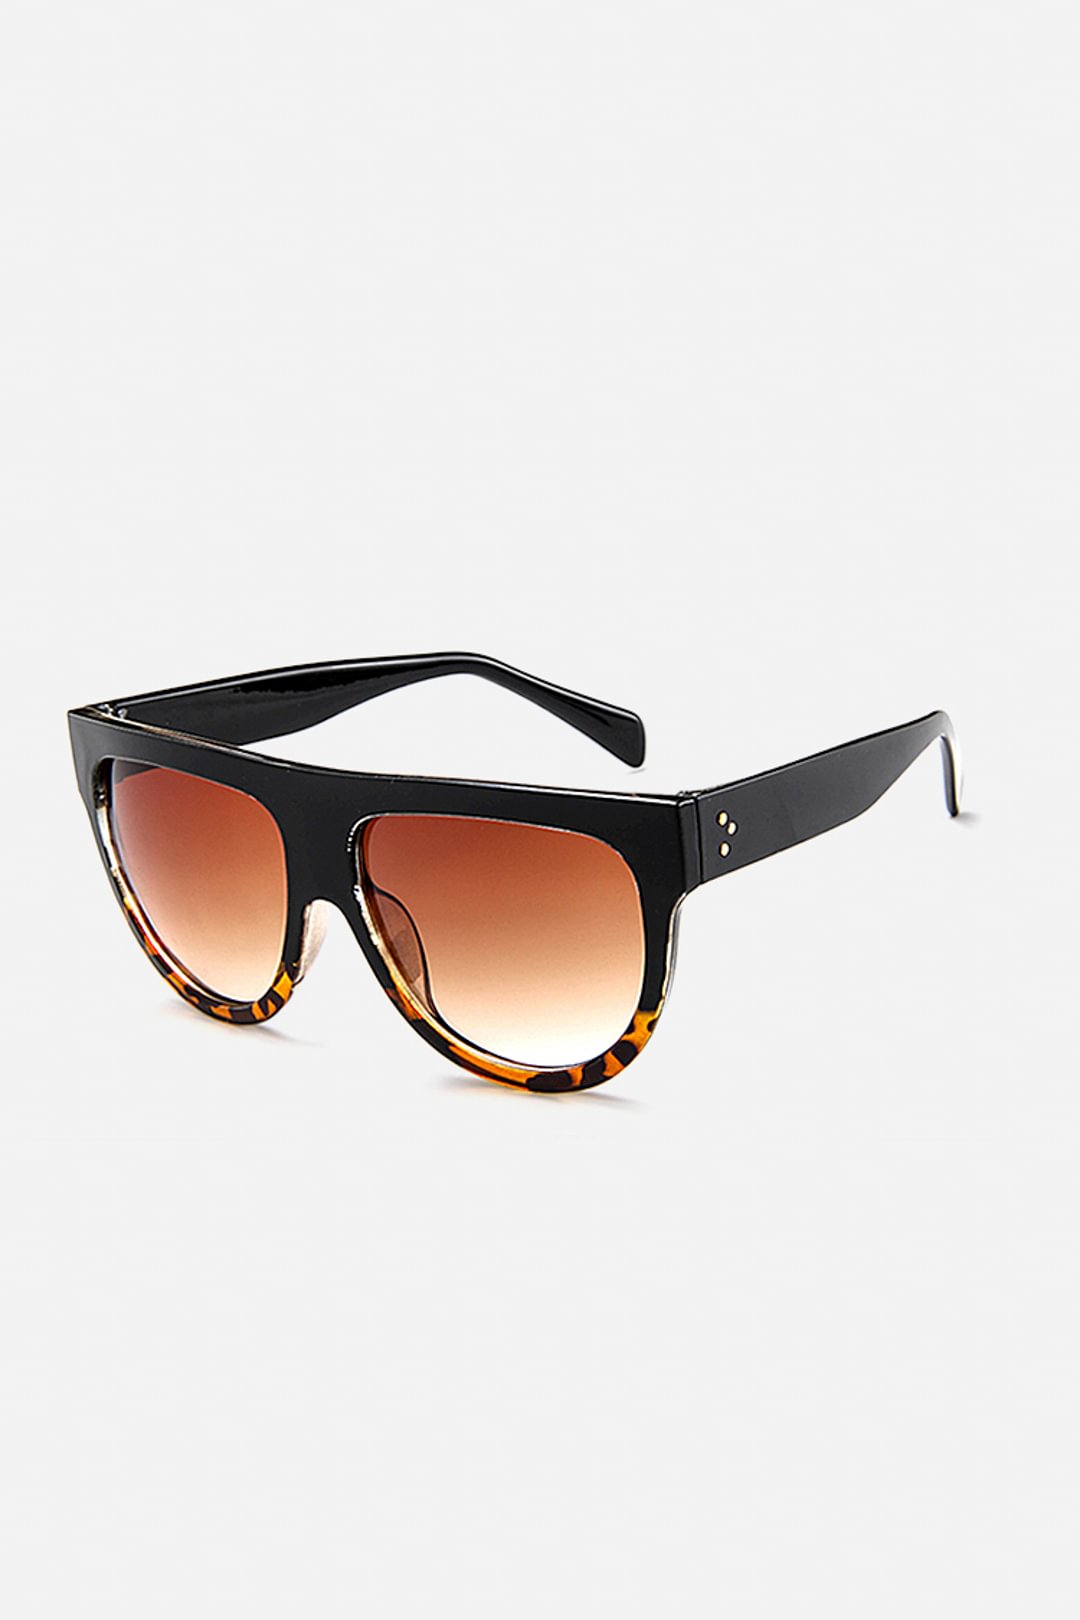 FashionV-FashionV Retro Big Frame Sunglasses